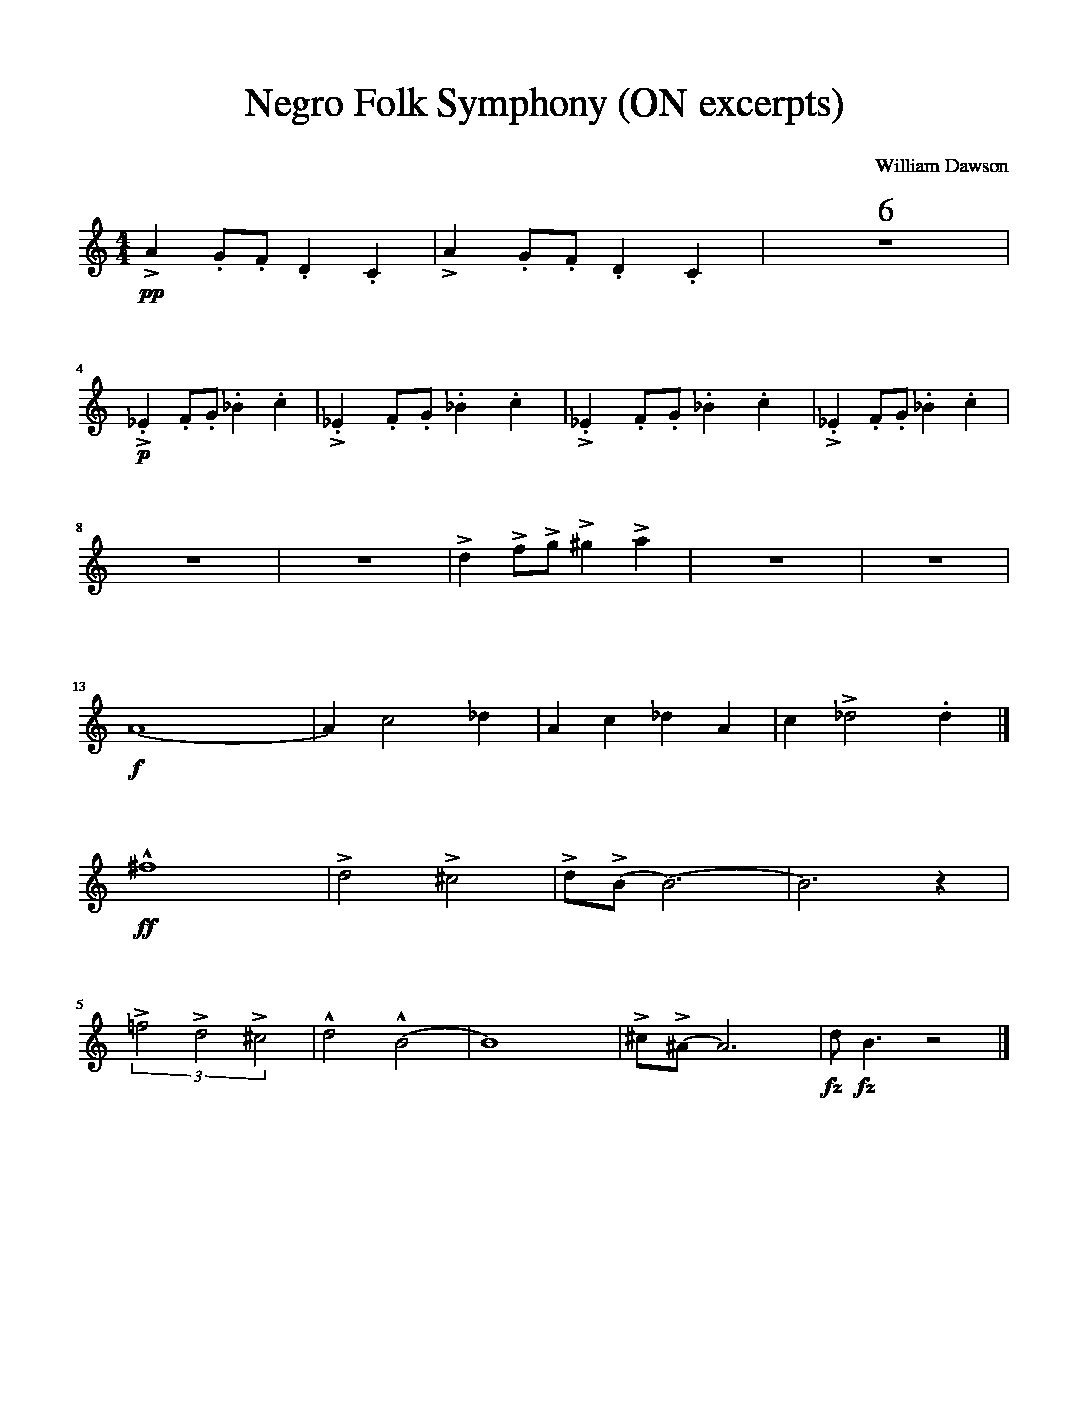 ON-Trumpet-Excerpts-2122 updated